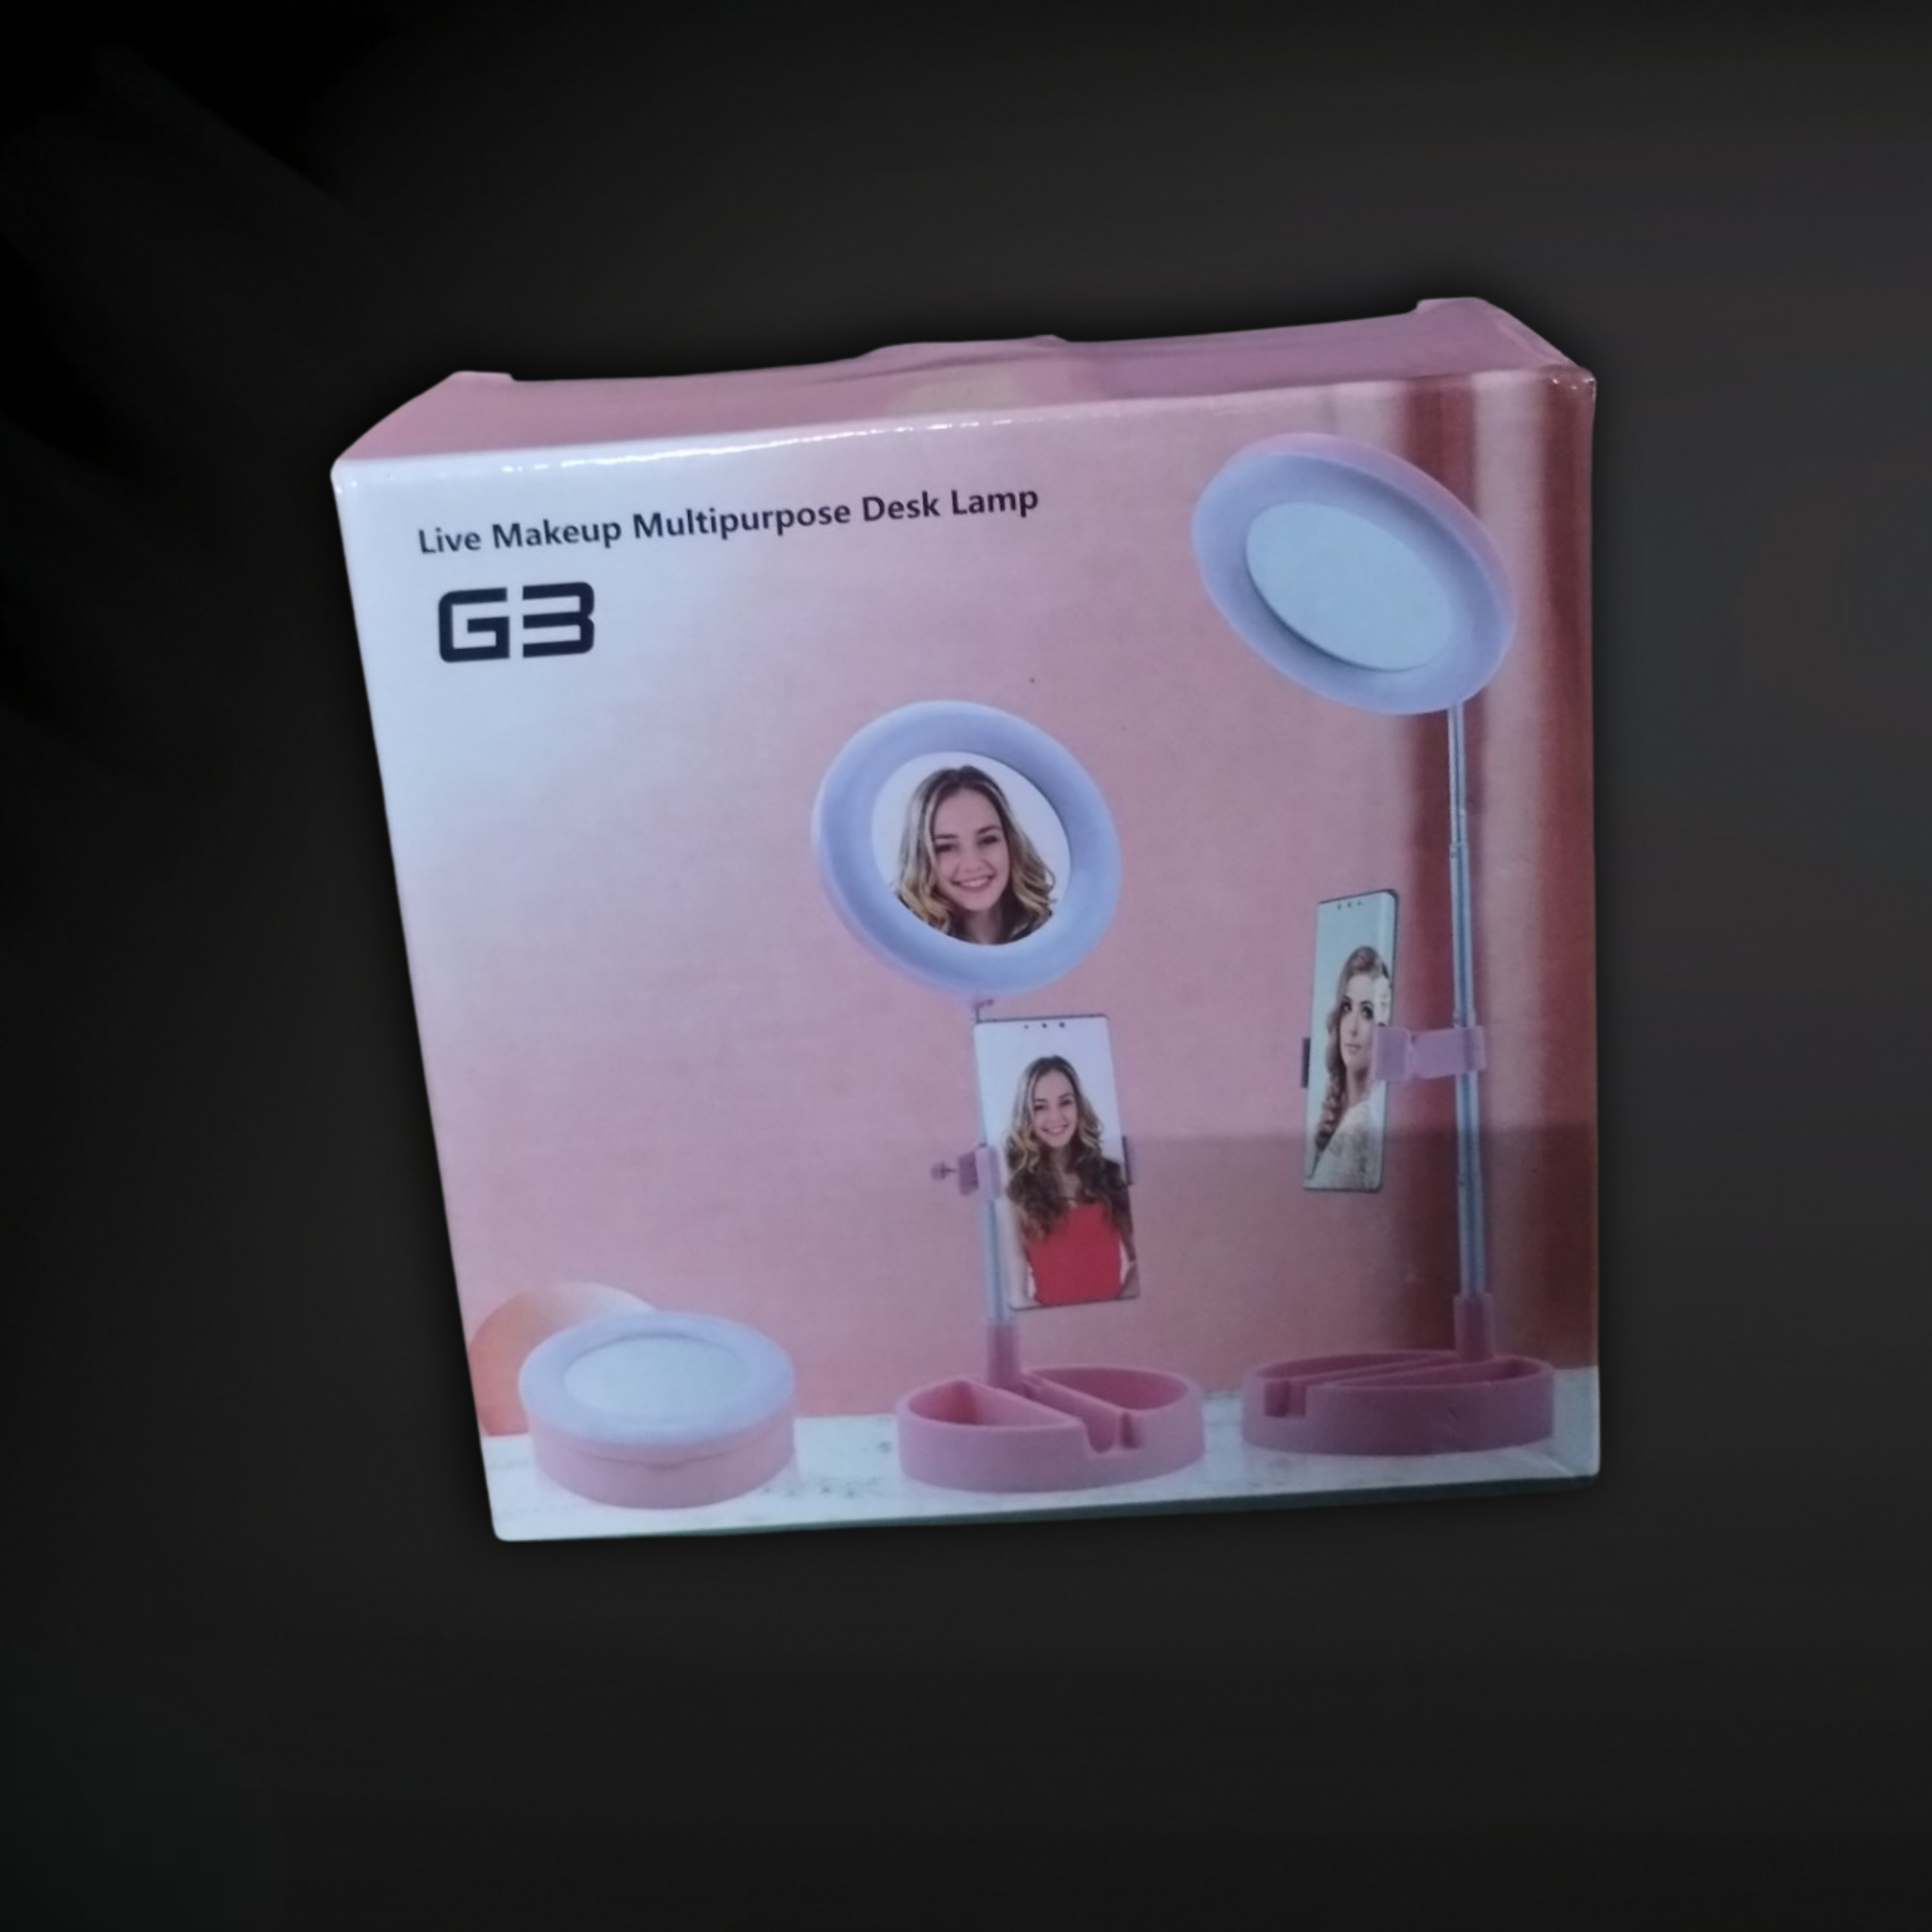 G3 Live Makeup Multipurpose Desk Lamp with Phone Holder